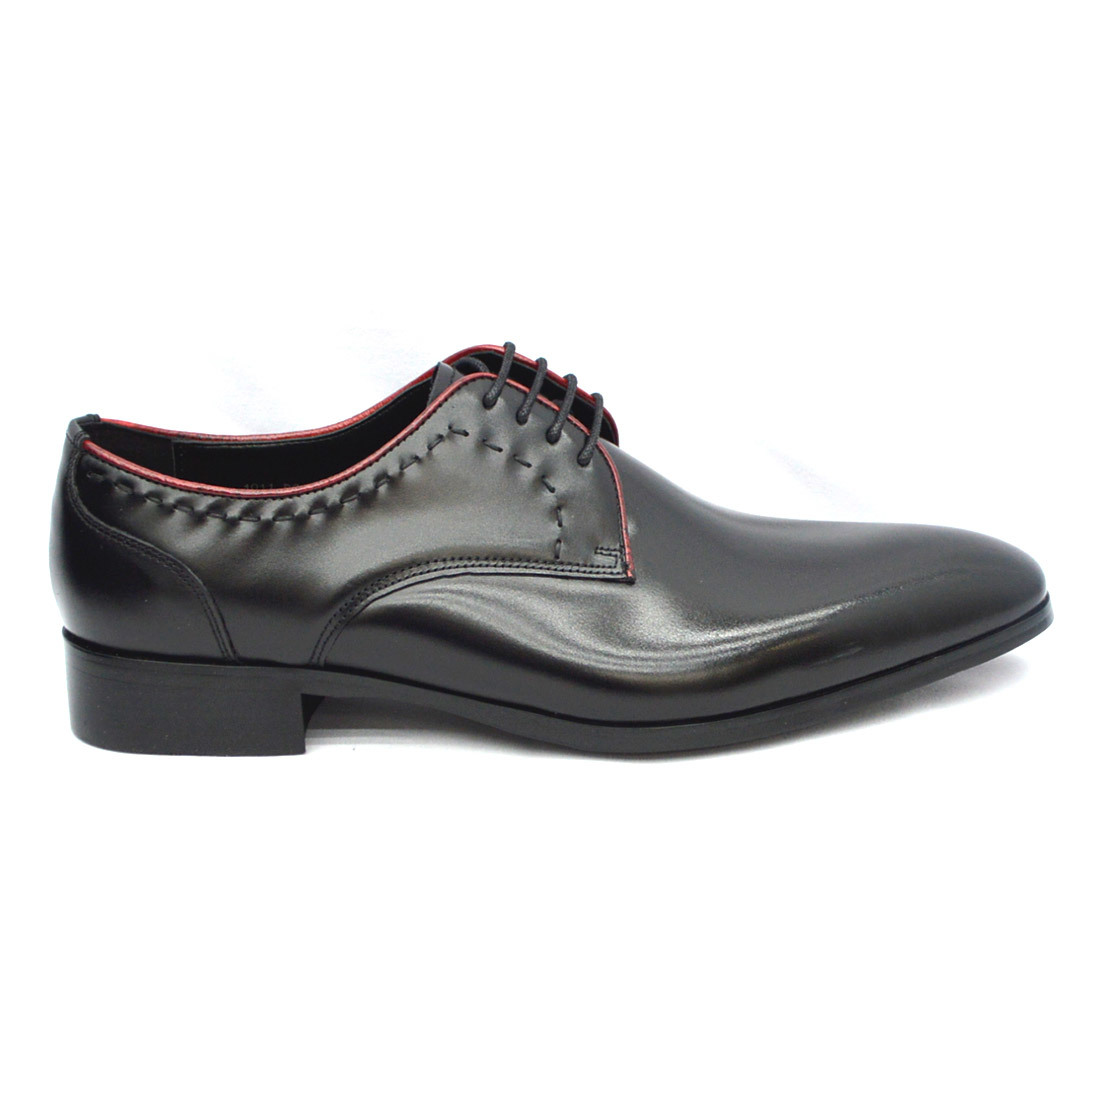 ▲ANTONIO DUCATI アントニオ ドゥカティ プレーントゥ ビジネス シューズ 1291 紳士靴 ブラック Black 黒 25.0cm (0910010436-bk-s250)_画像2